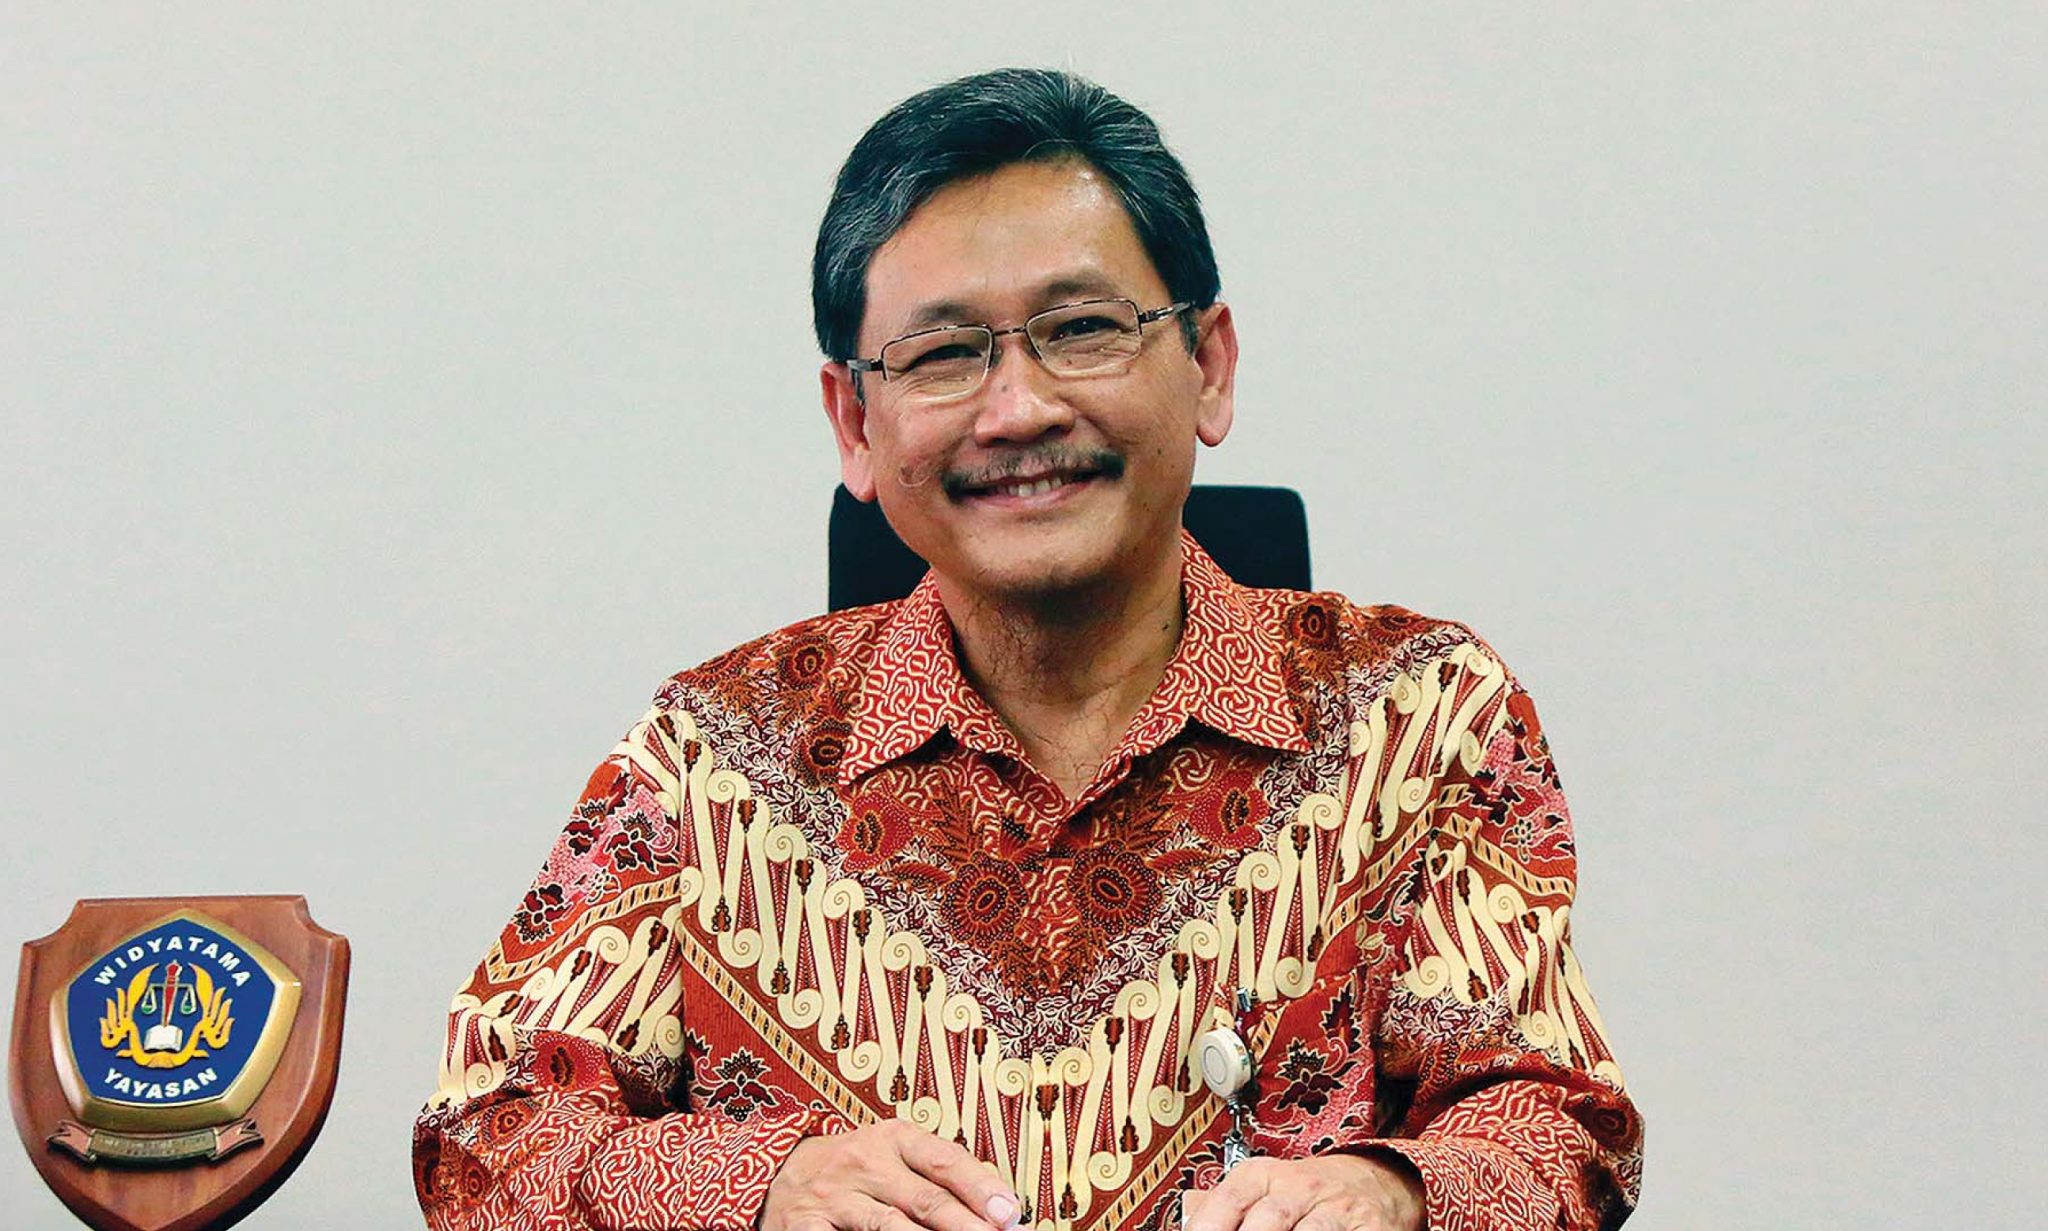 Islahuzzaman, Rektor Universitas Widyatama, Universitas Widyatama Bandung, Rektor Indonesia